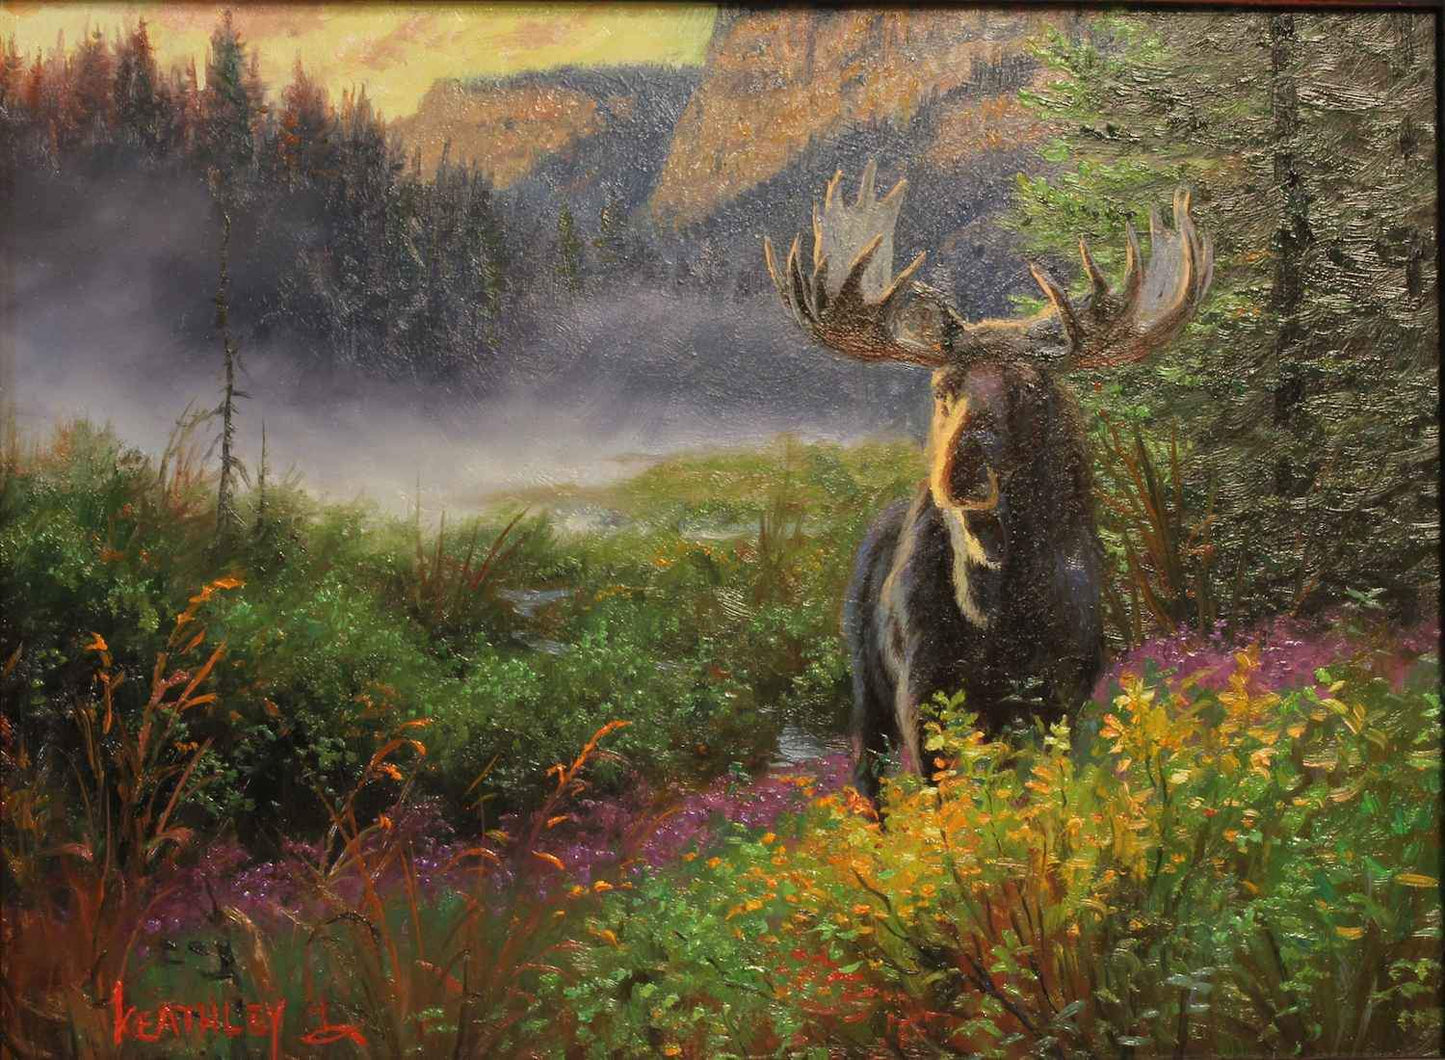 Moose in a mountain landscape. Painting by Mark Keathley. Sorrel Sky Gallery